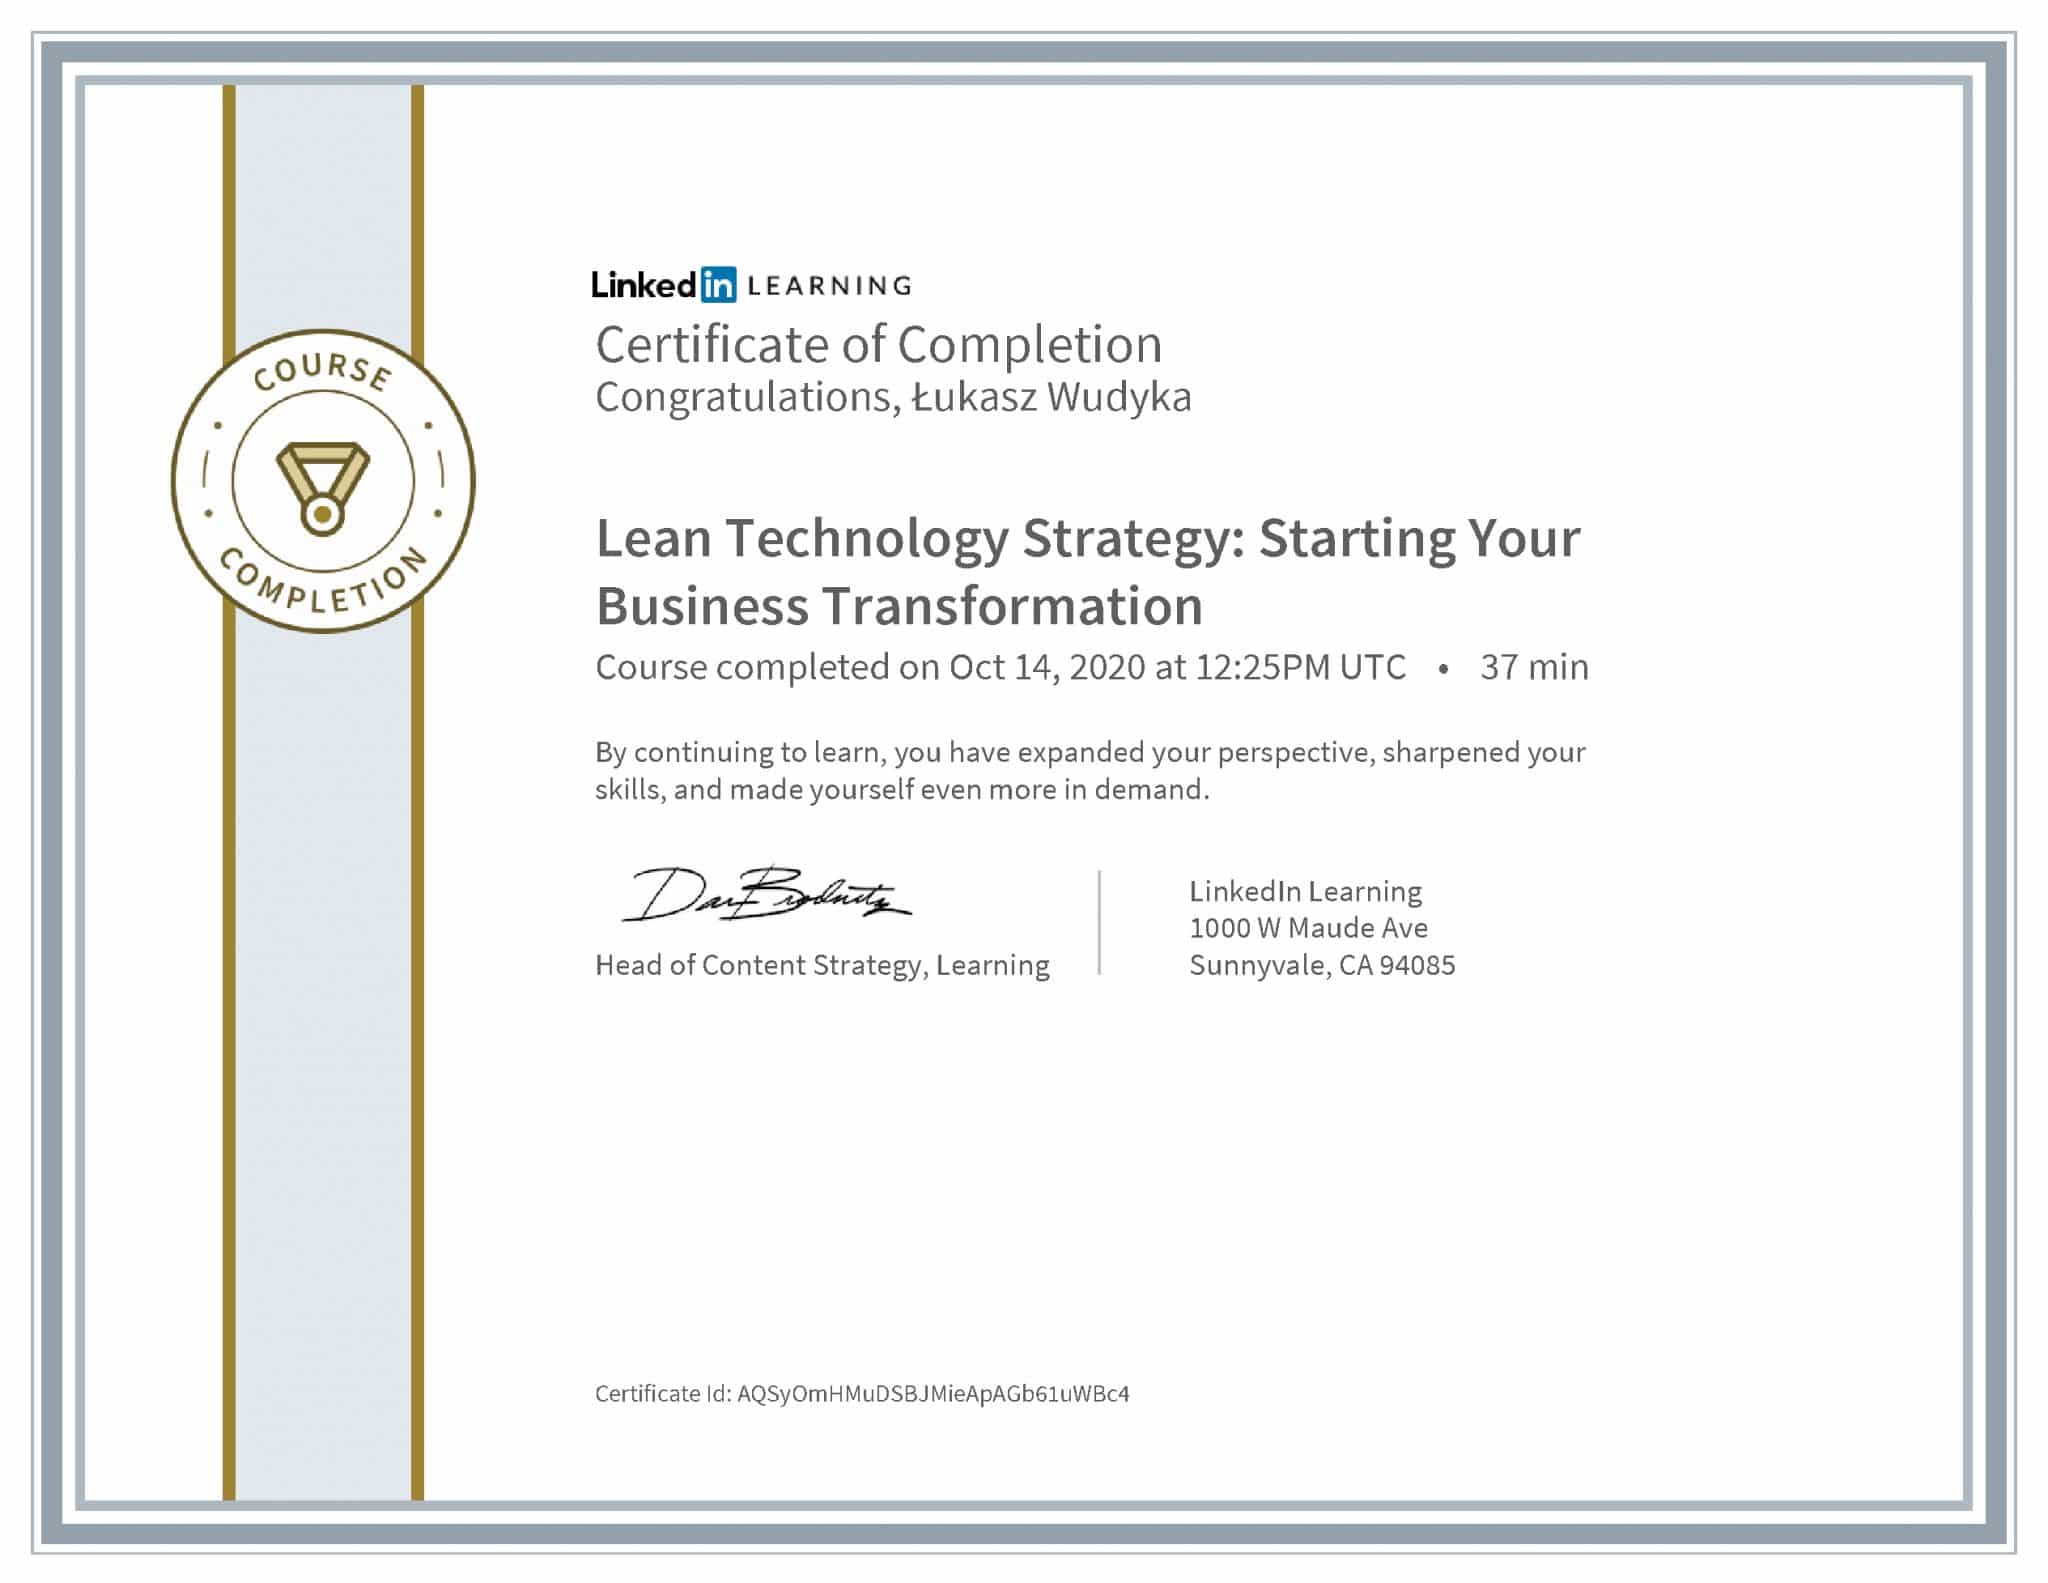 Łukasz Wudyka certyfikat LinkedIn Lean Technology Strategy: Starting Your Business Transformation